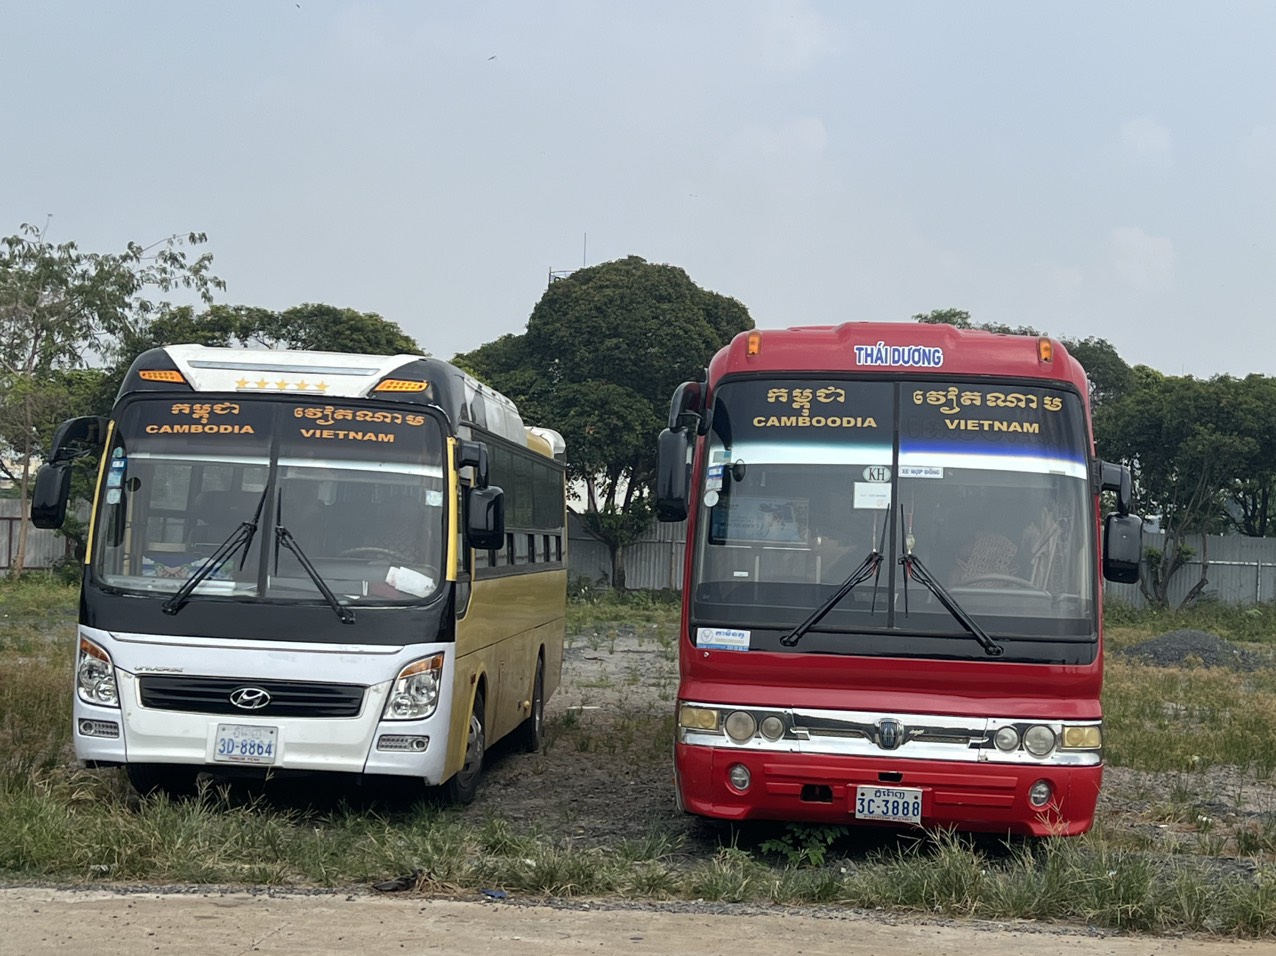 Cambodia bus for rental - Thai Duong Airbus Limousine